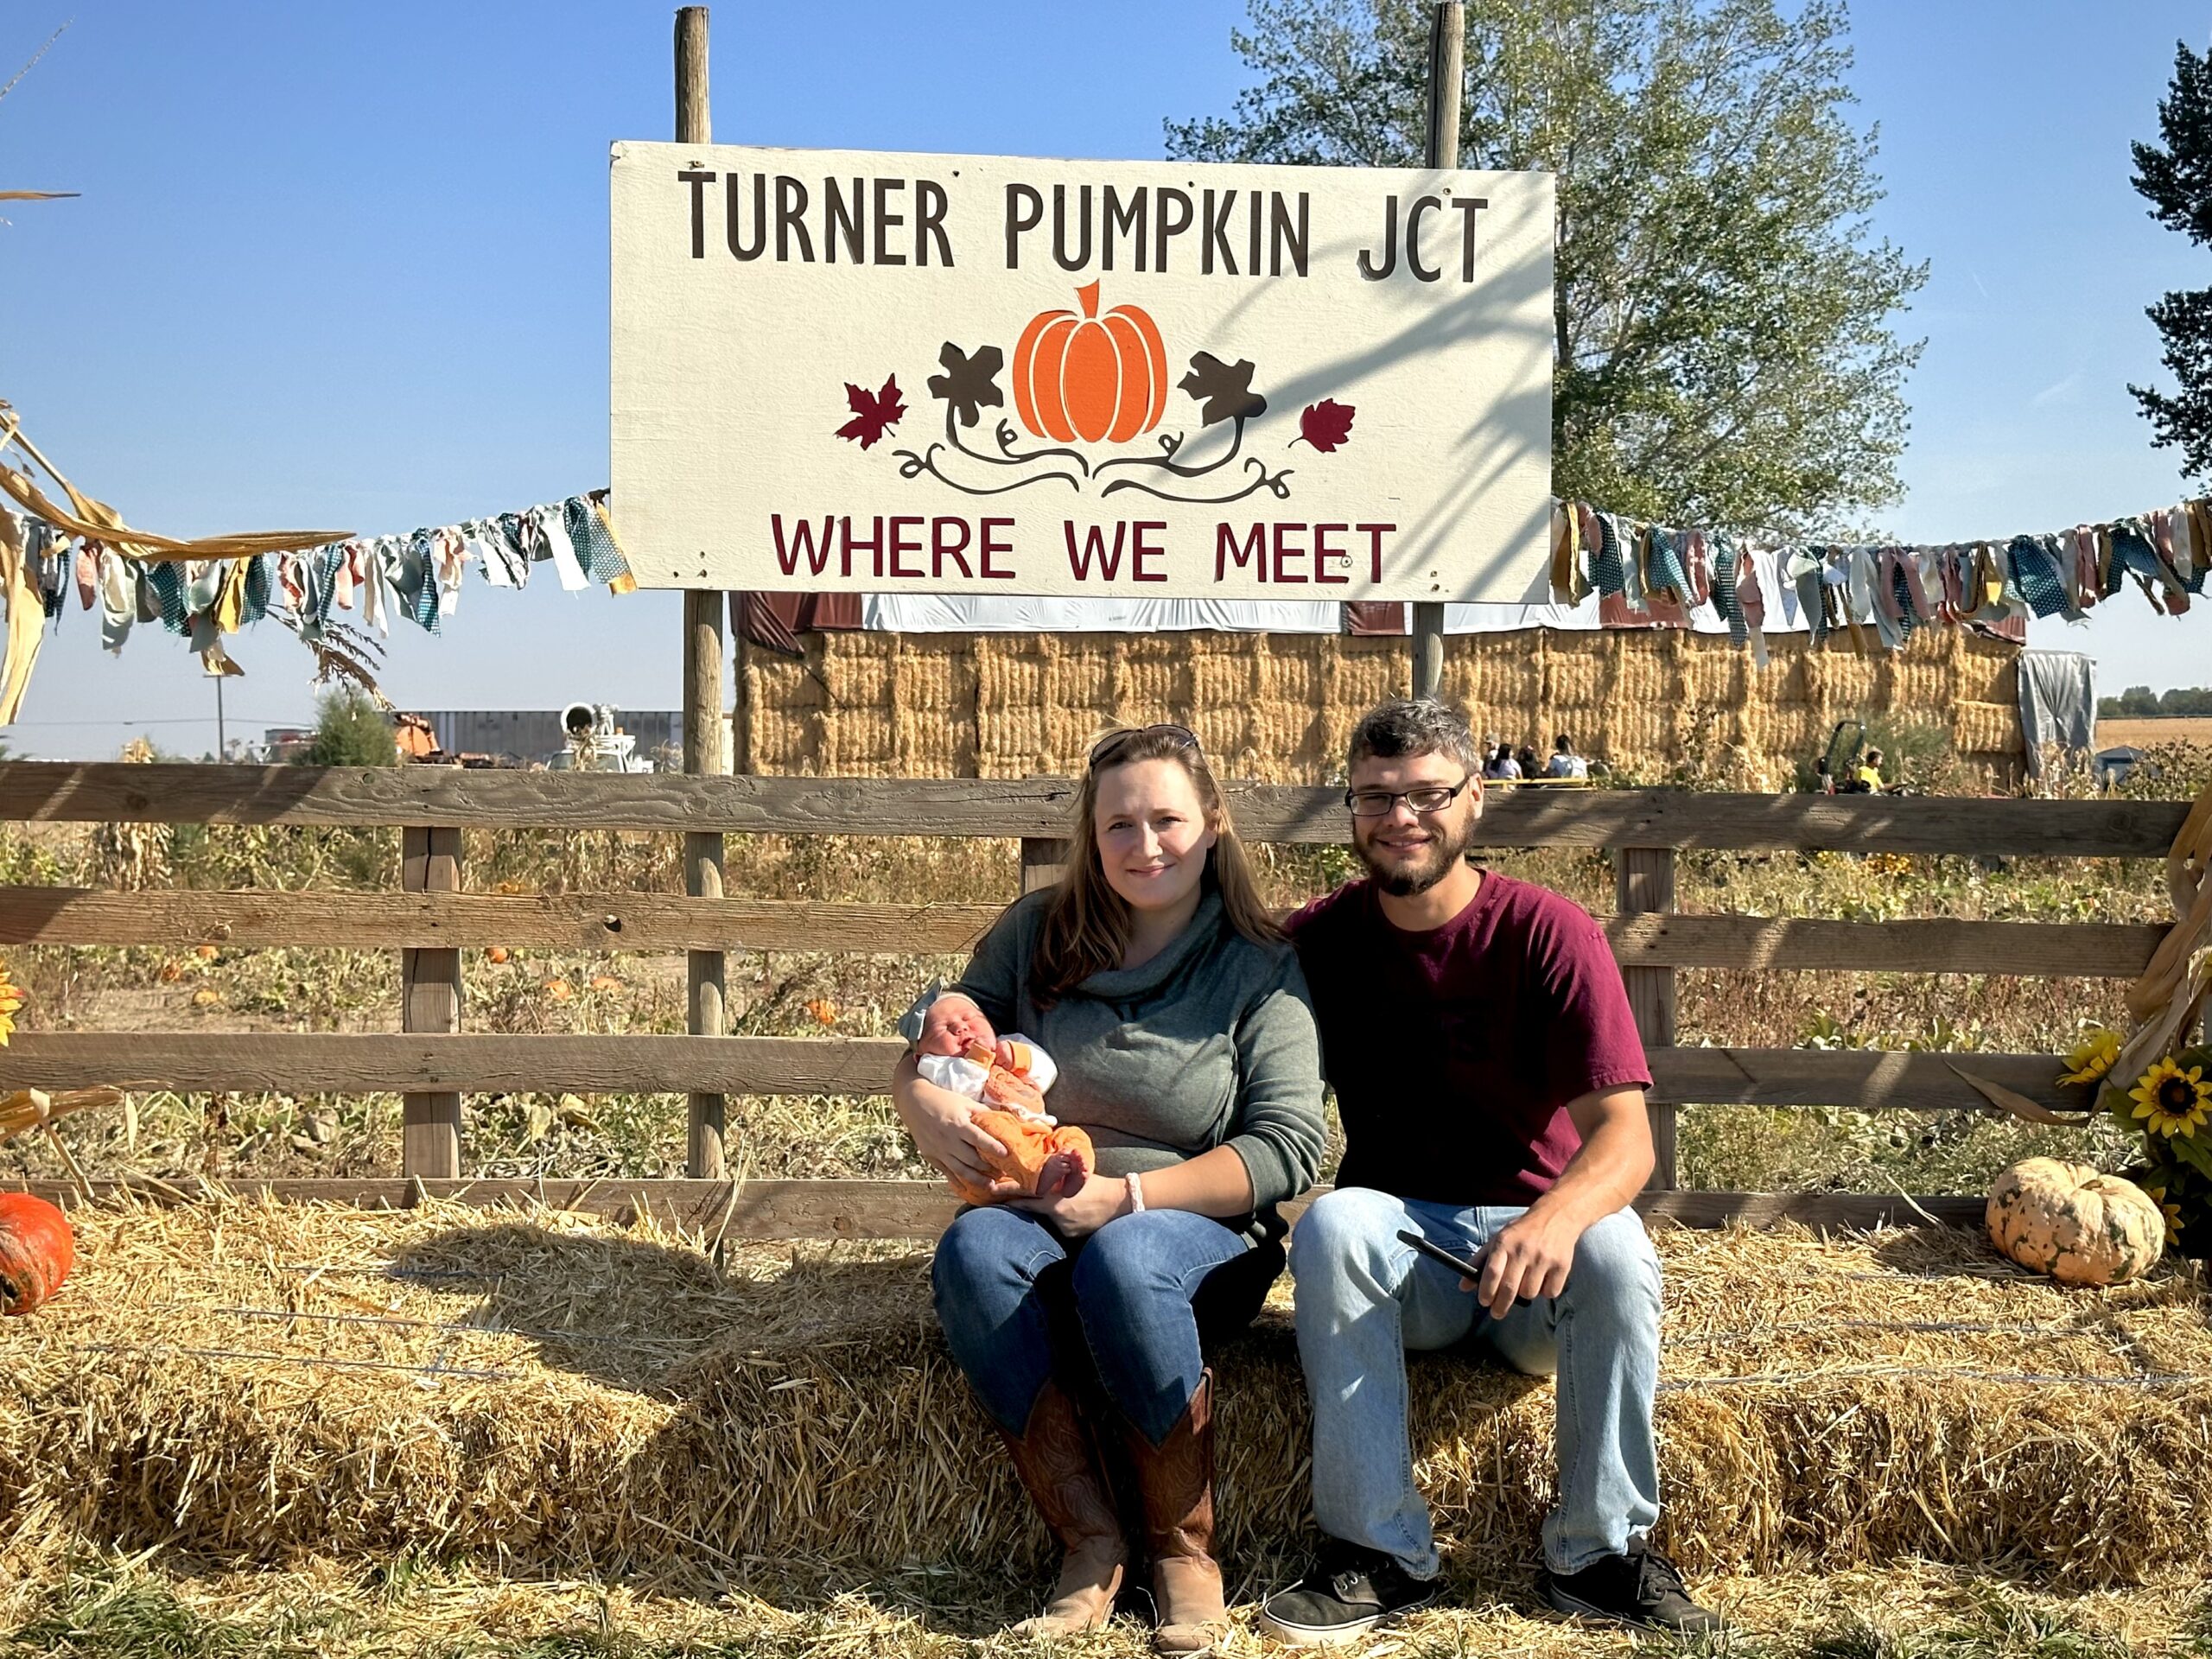 Turner pumpkin junction -100